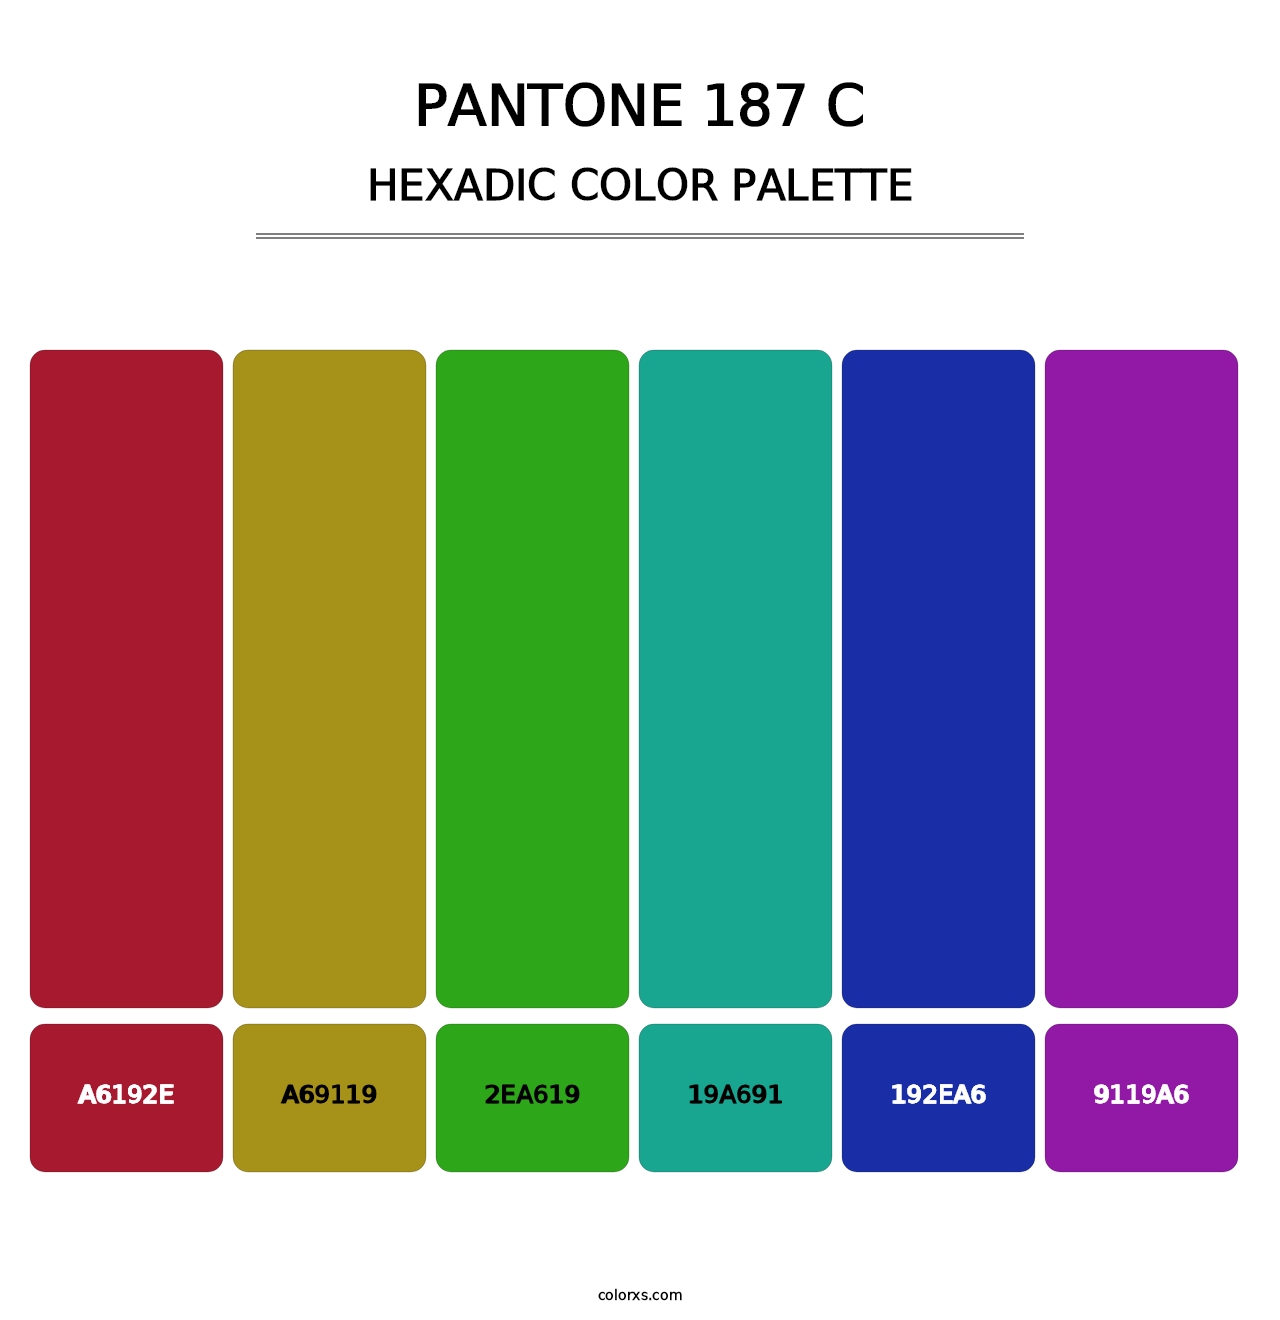 PANTONE 187 C - Hexadic Color Palette